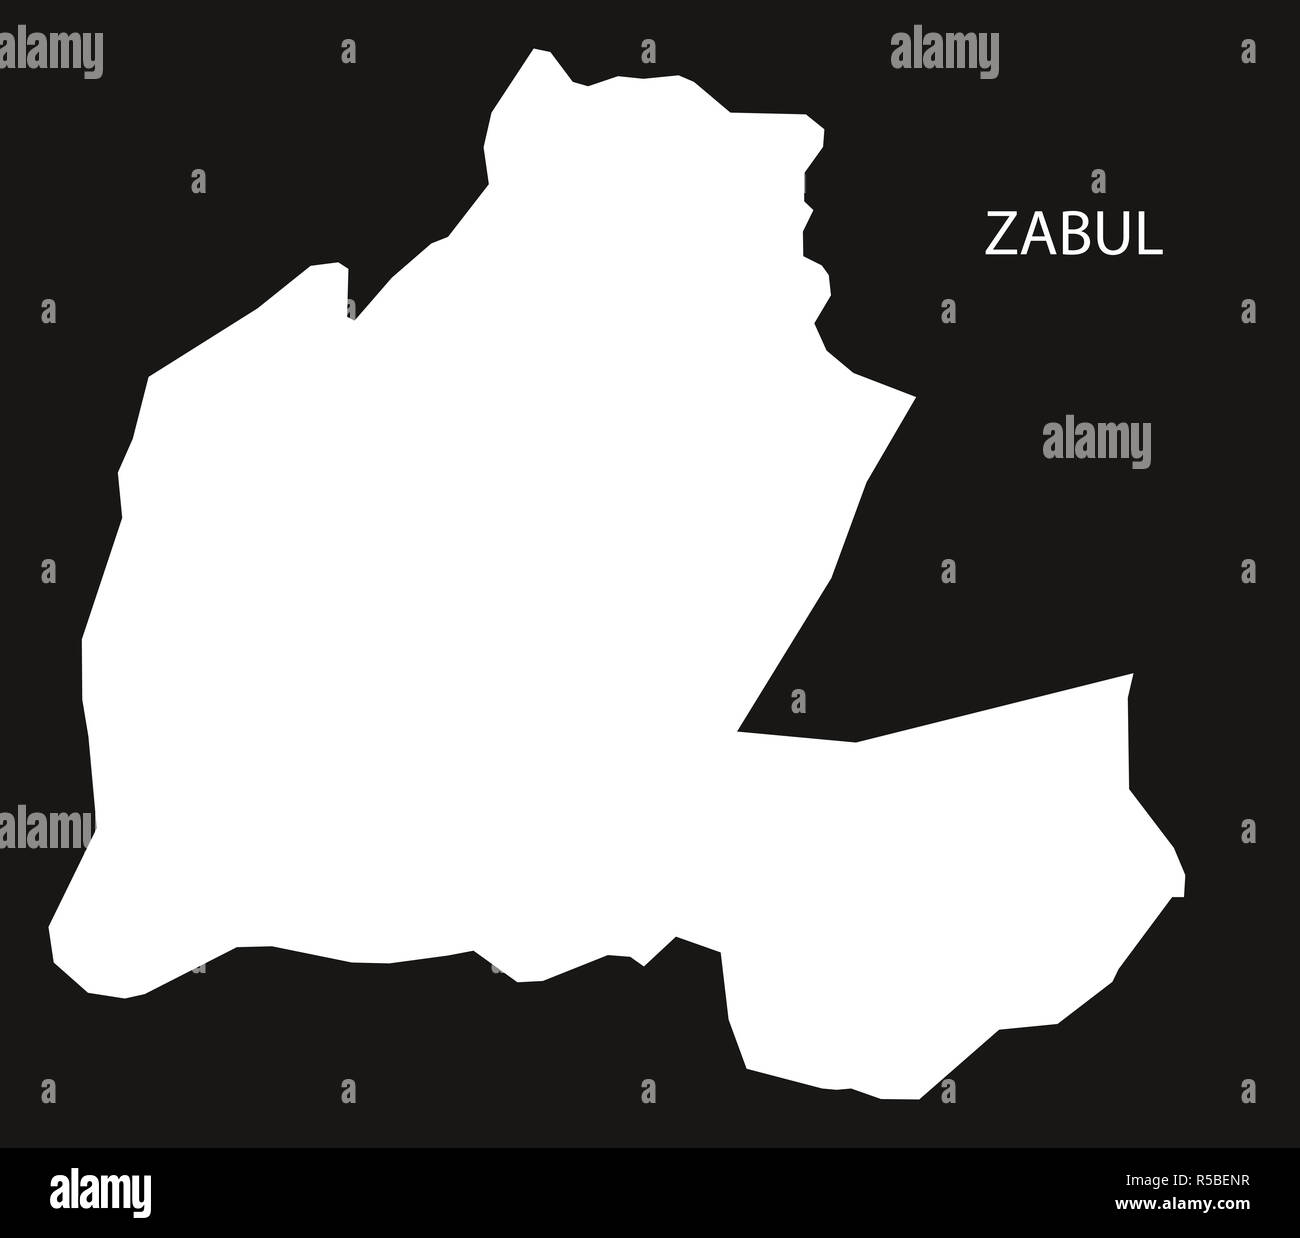 Zabul Afghanistan map black inverted silhouette illustration Stock Photo